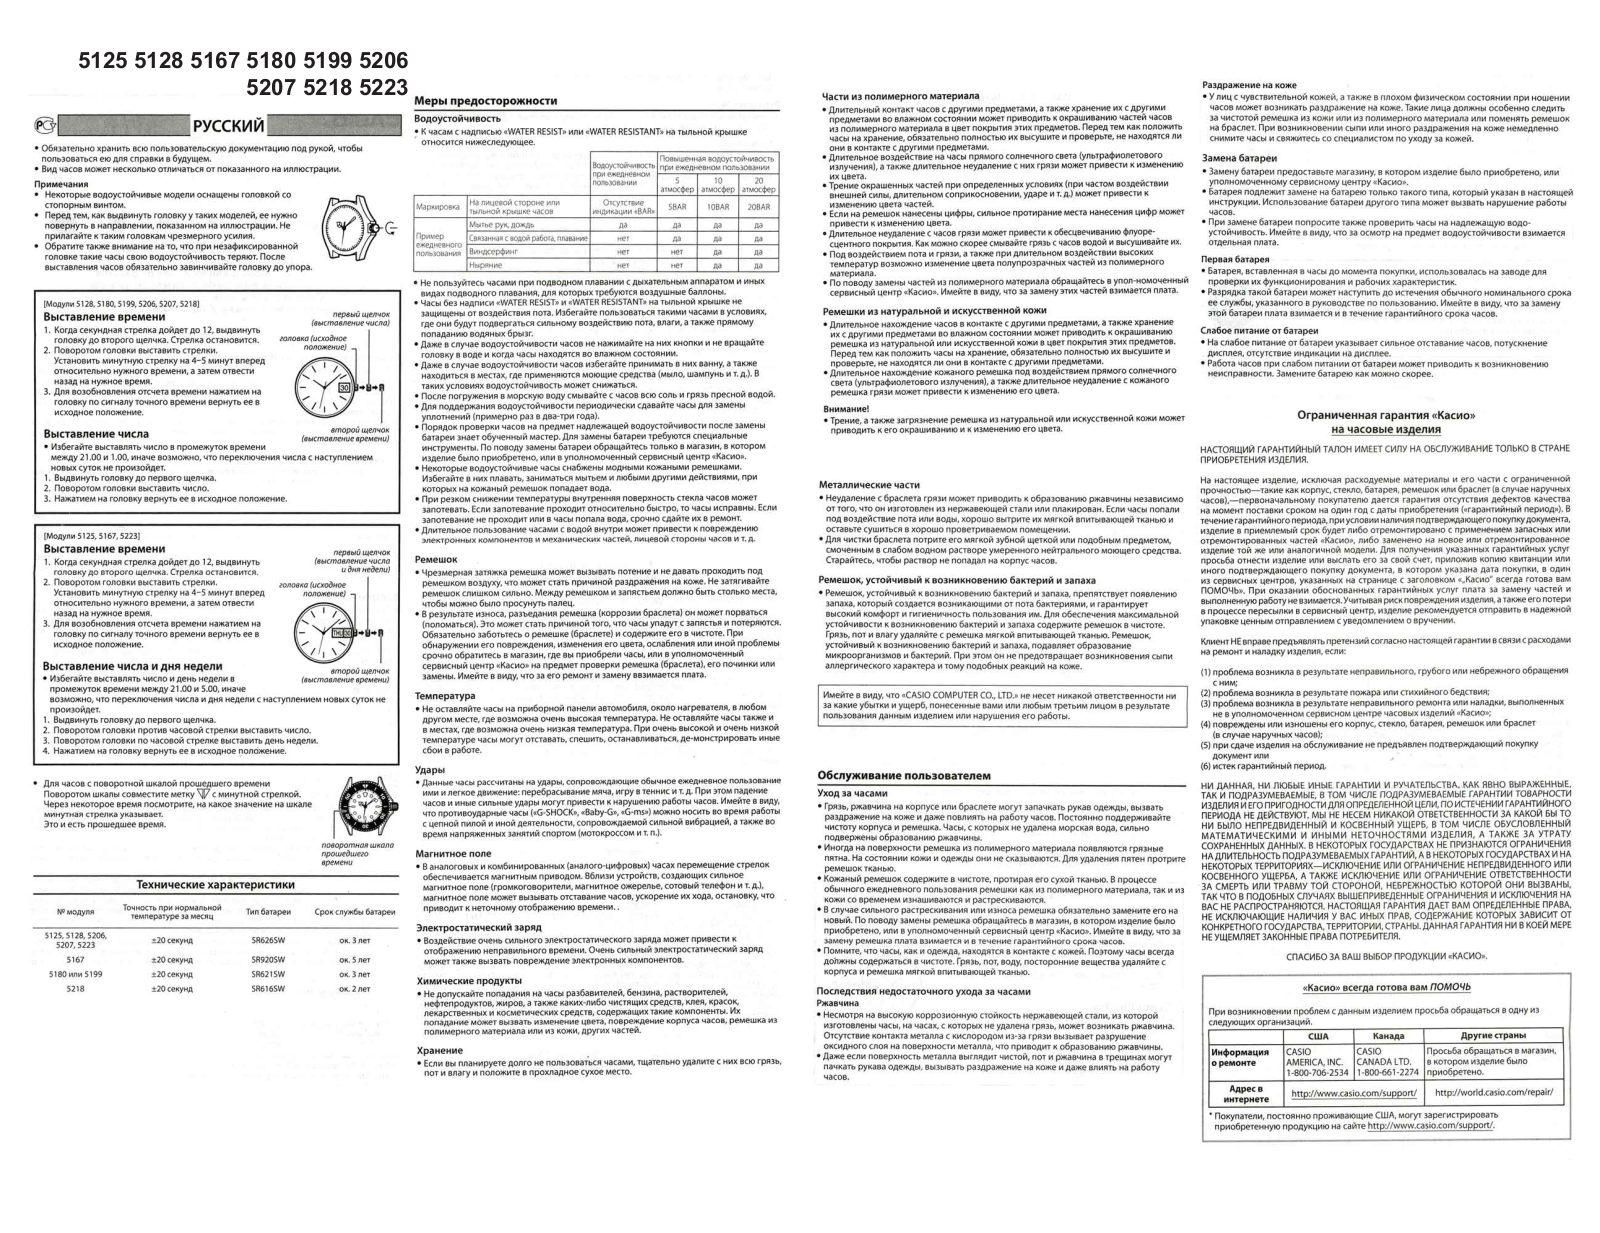 Casio EFR-100D-7A User Manual